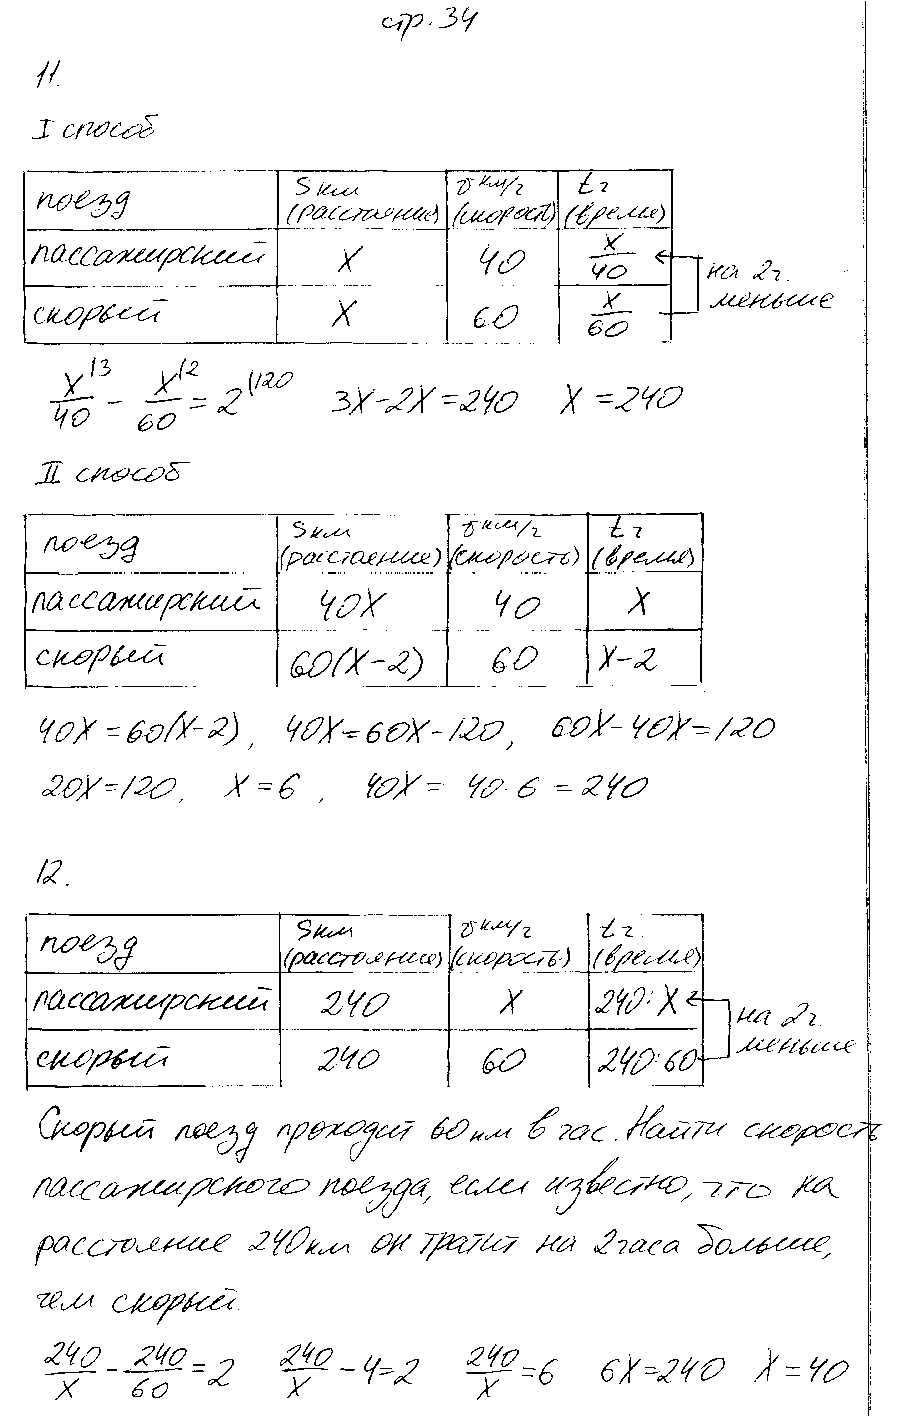 ГДЗ Алгебра 7 класс - стр. 34